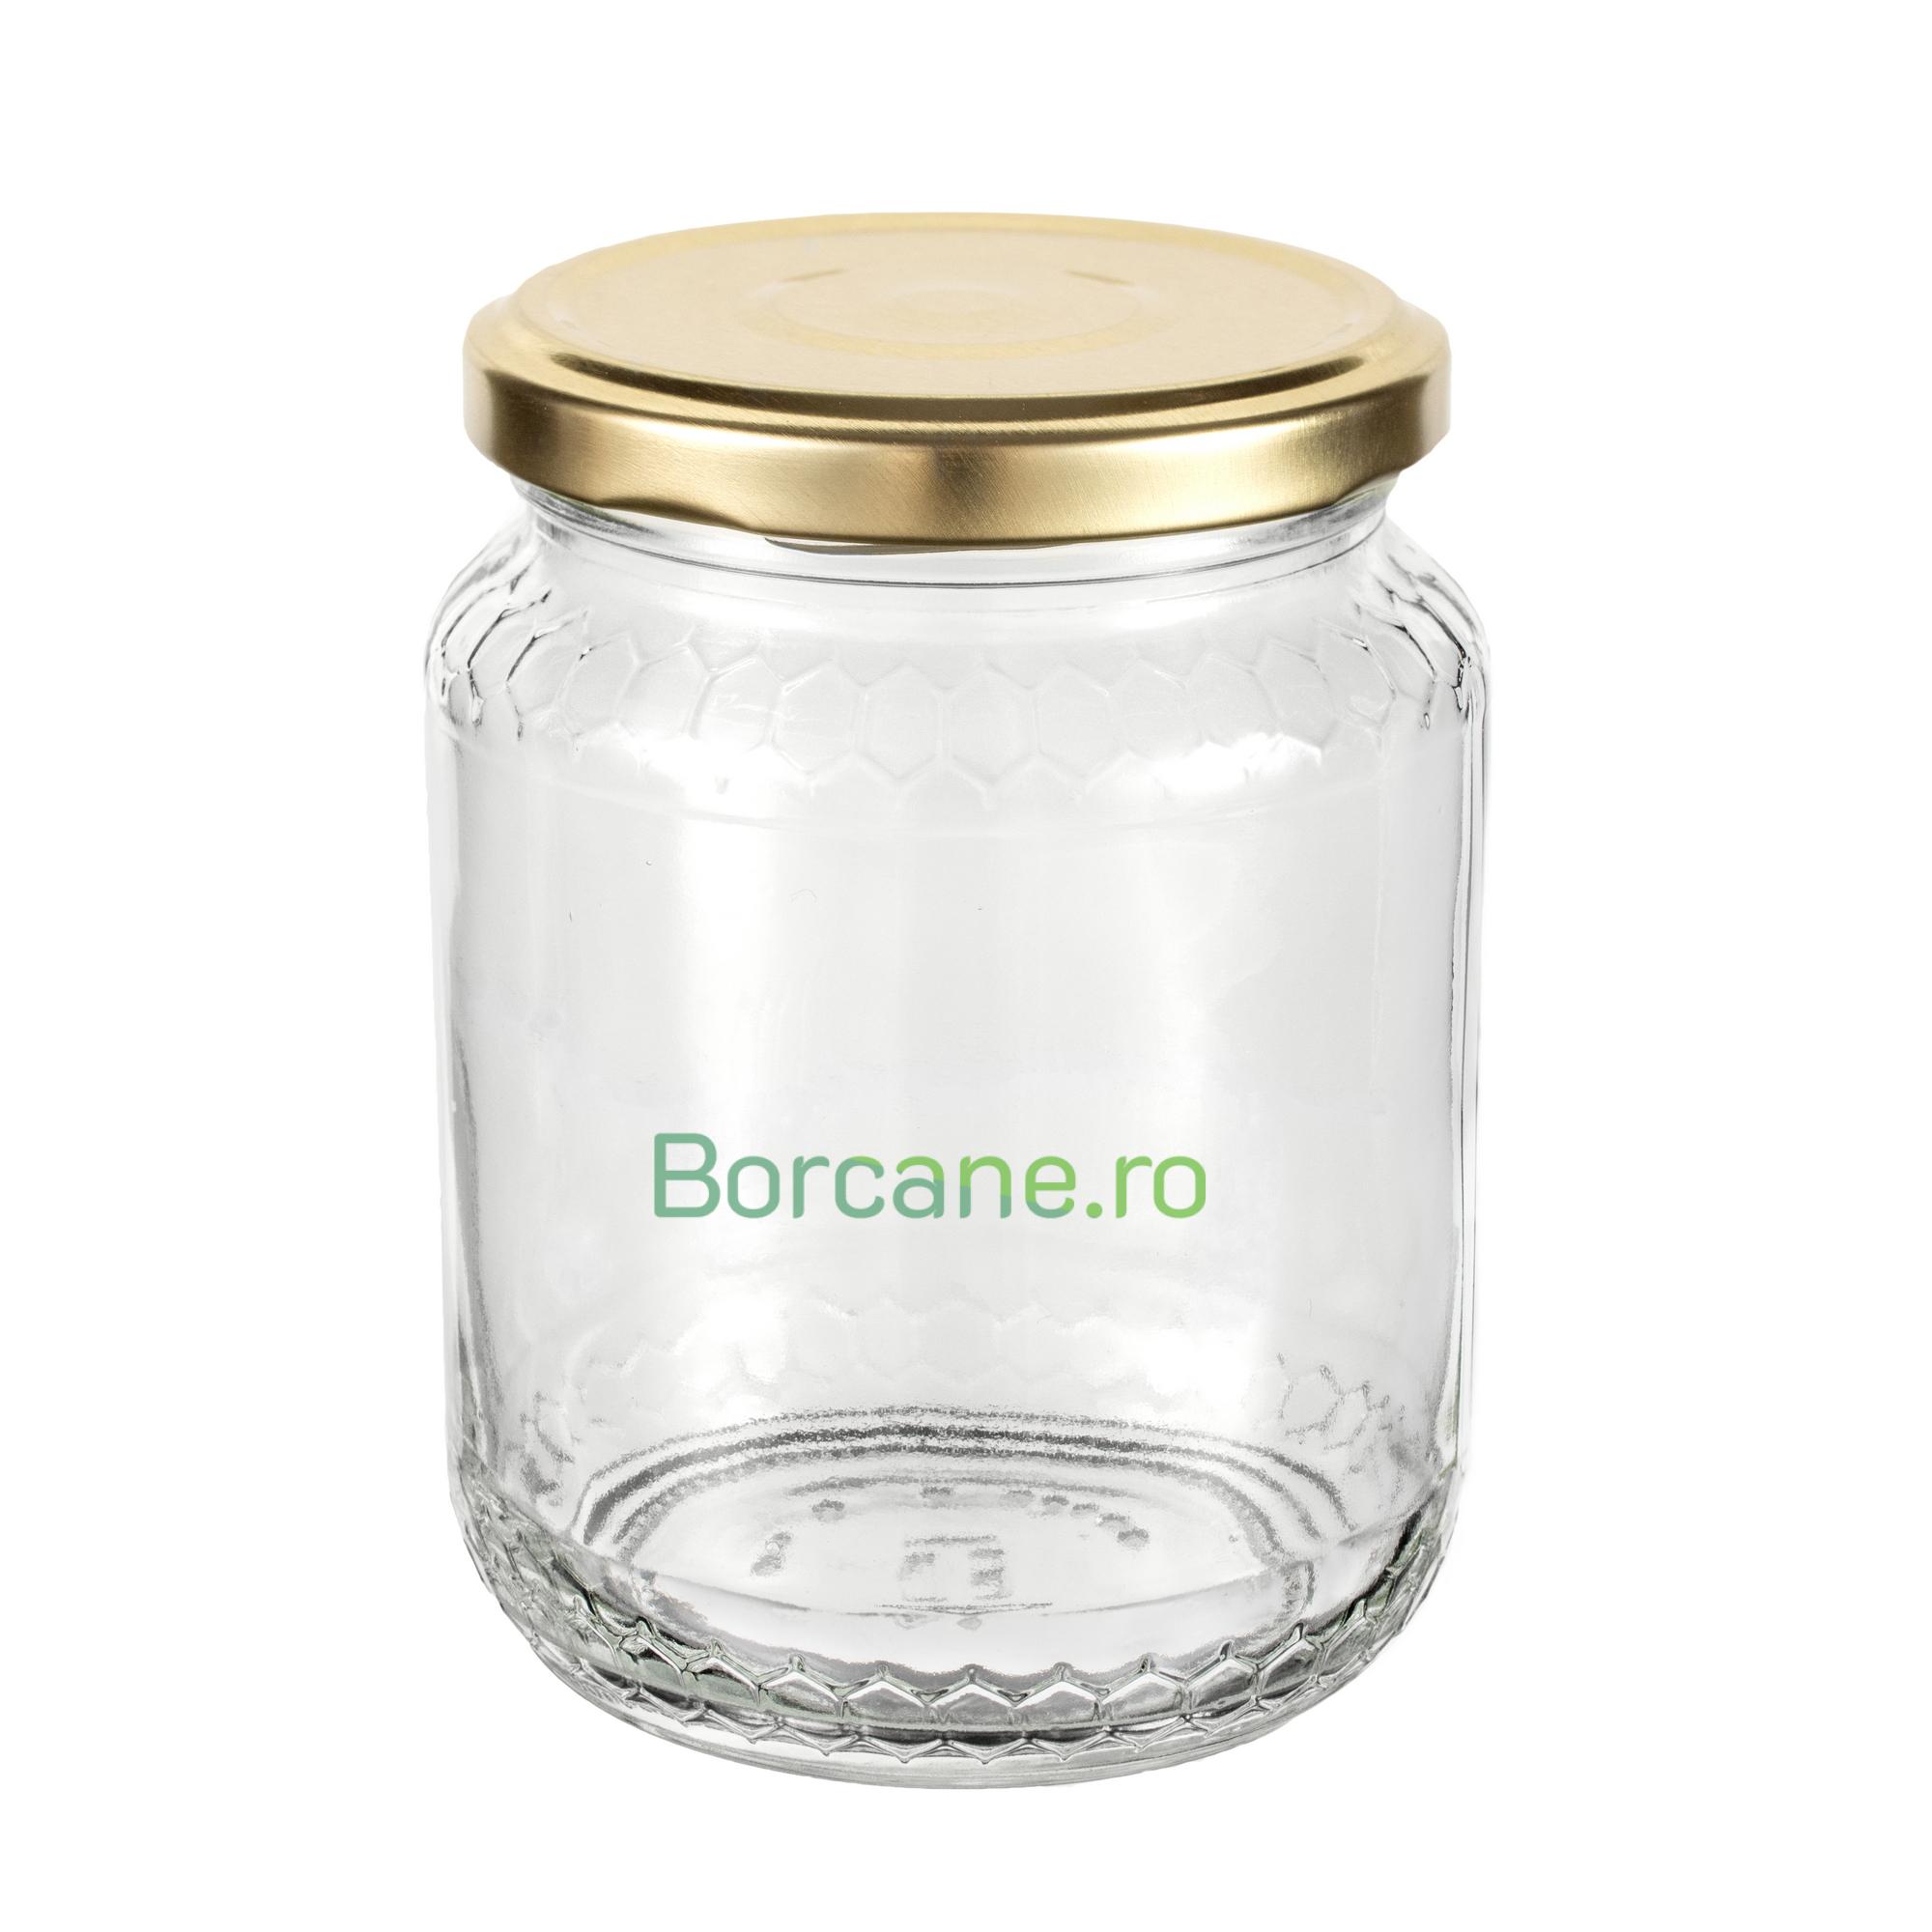 private insect Be surprised Borcan 390 ml Fagure TO 70 Borcane Borcane.ro